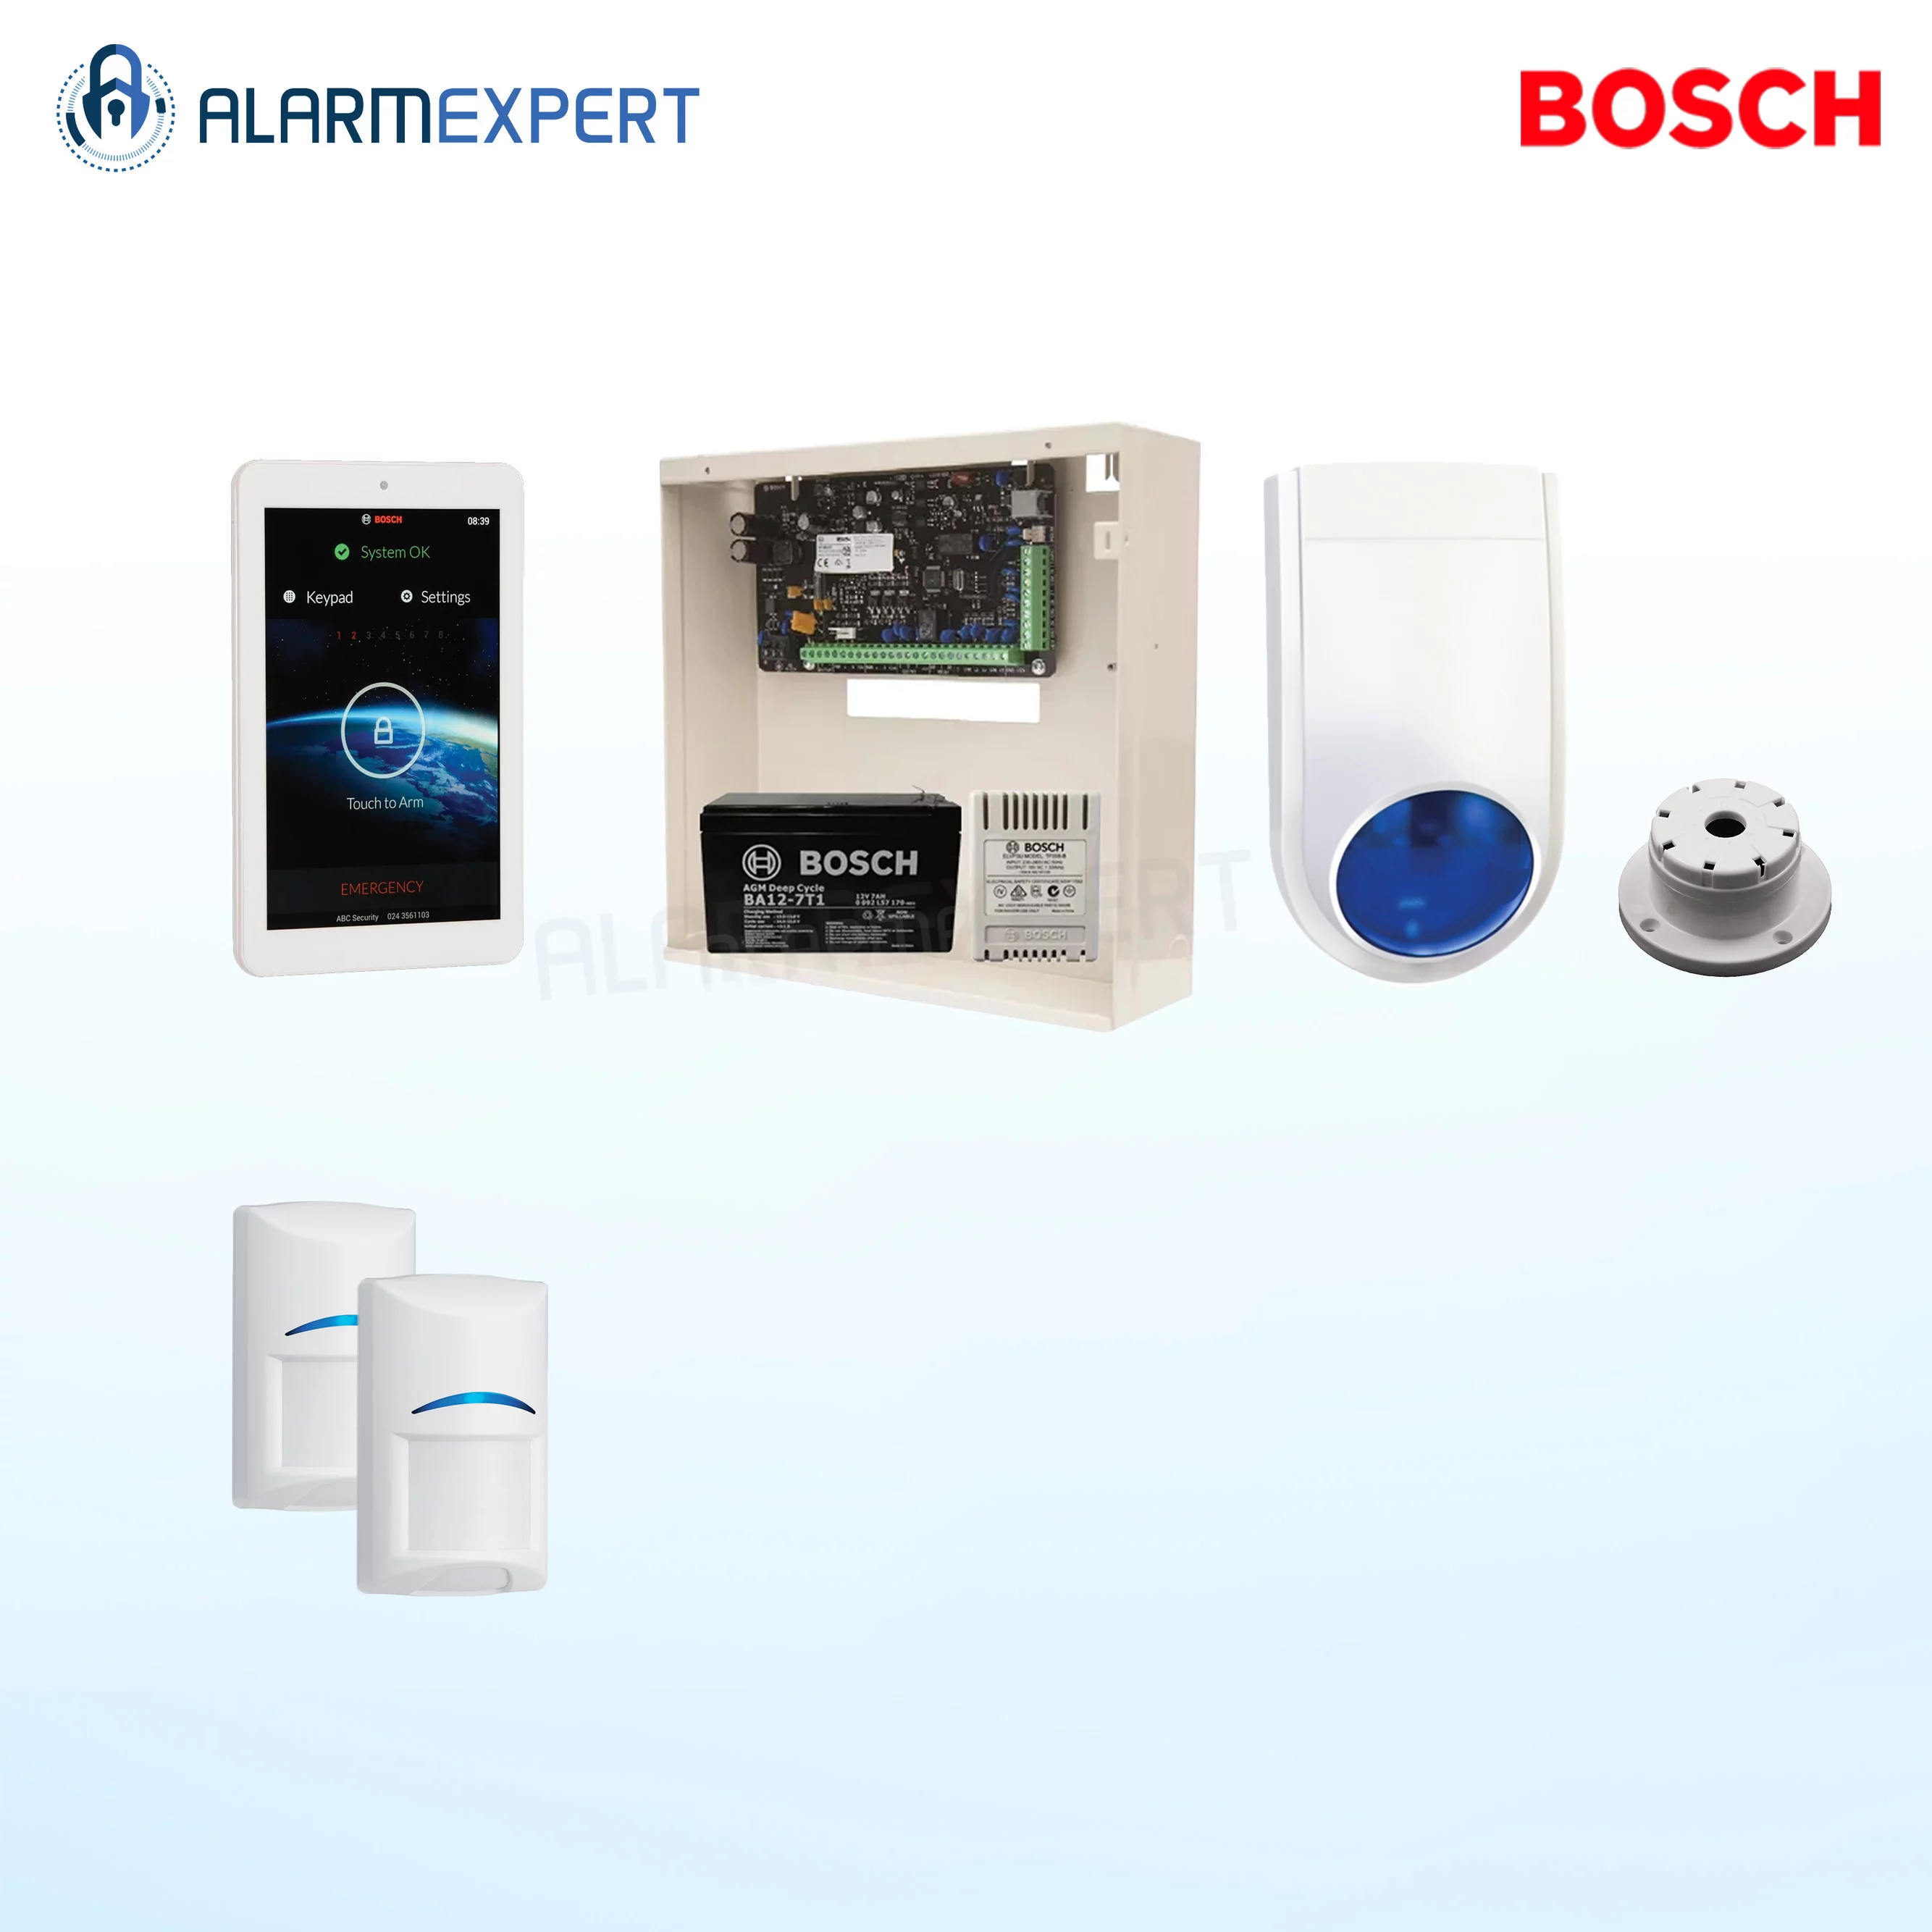 Bosch Solution 2000 + 2 PIRs + 7" Touch screen Keypad